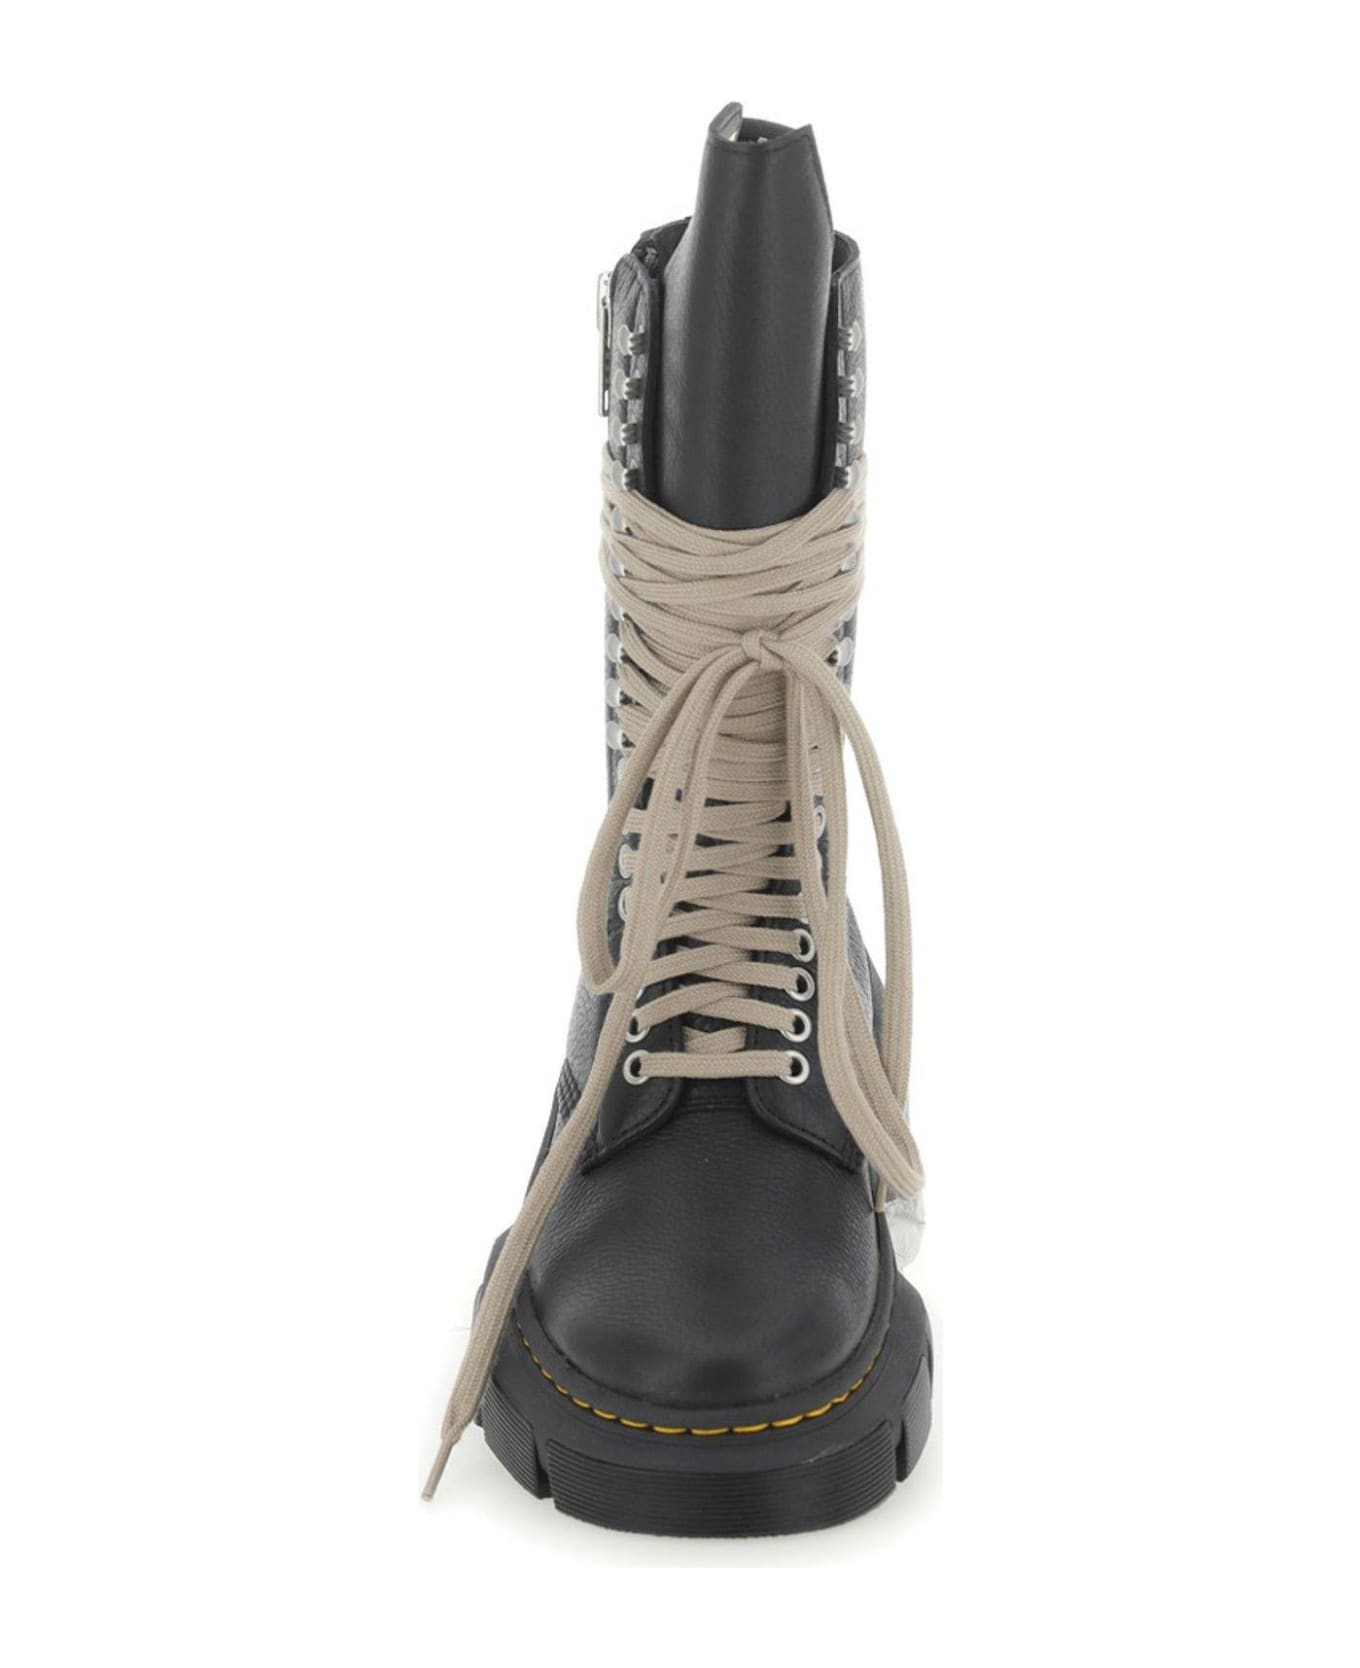 Rick Owens x Dr. Martens X Dr. Martens 1918 Dmxl Calf Length Boots ブーツ